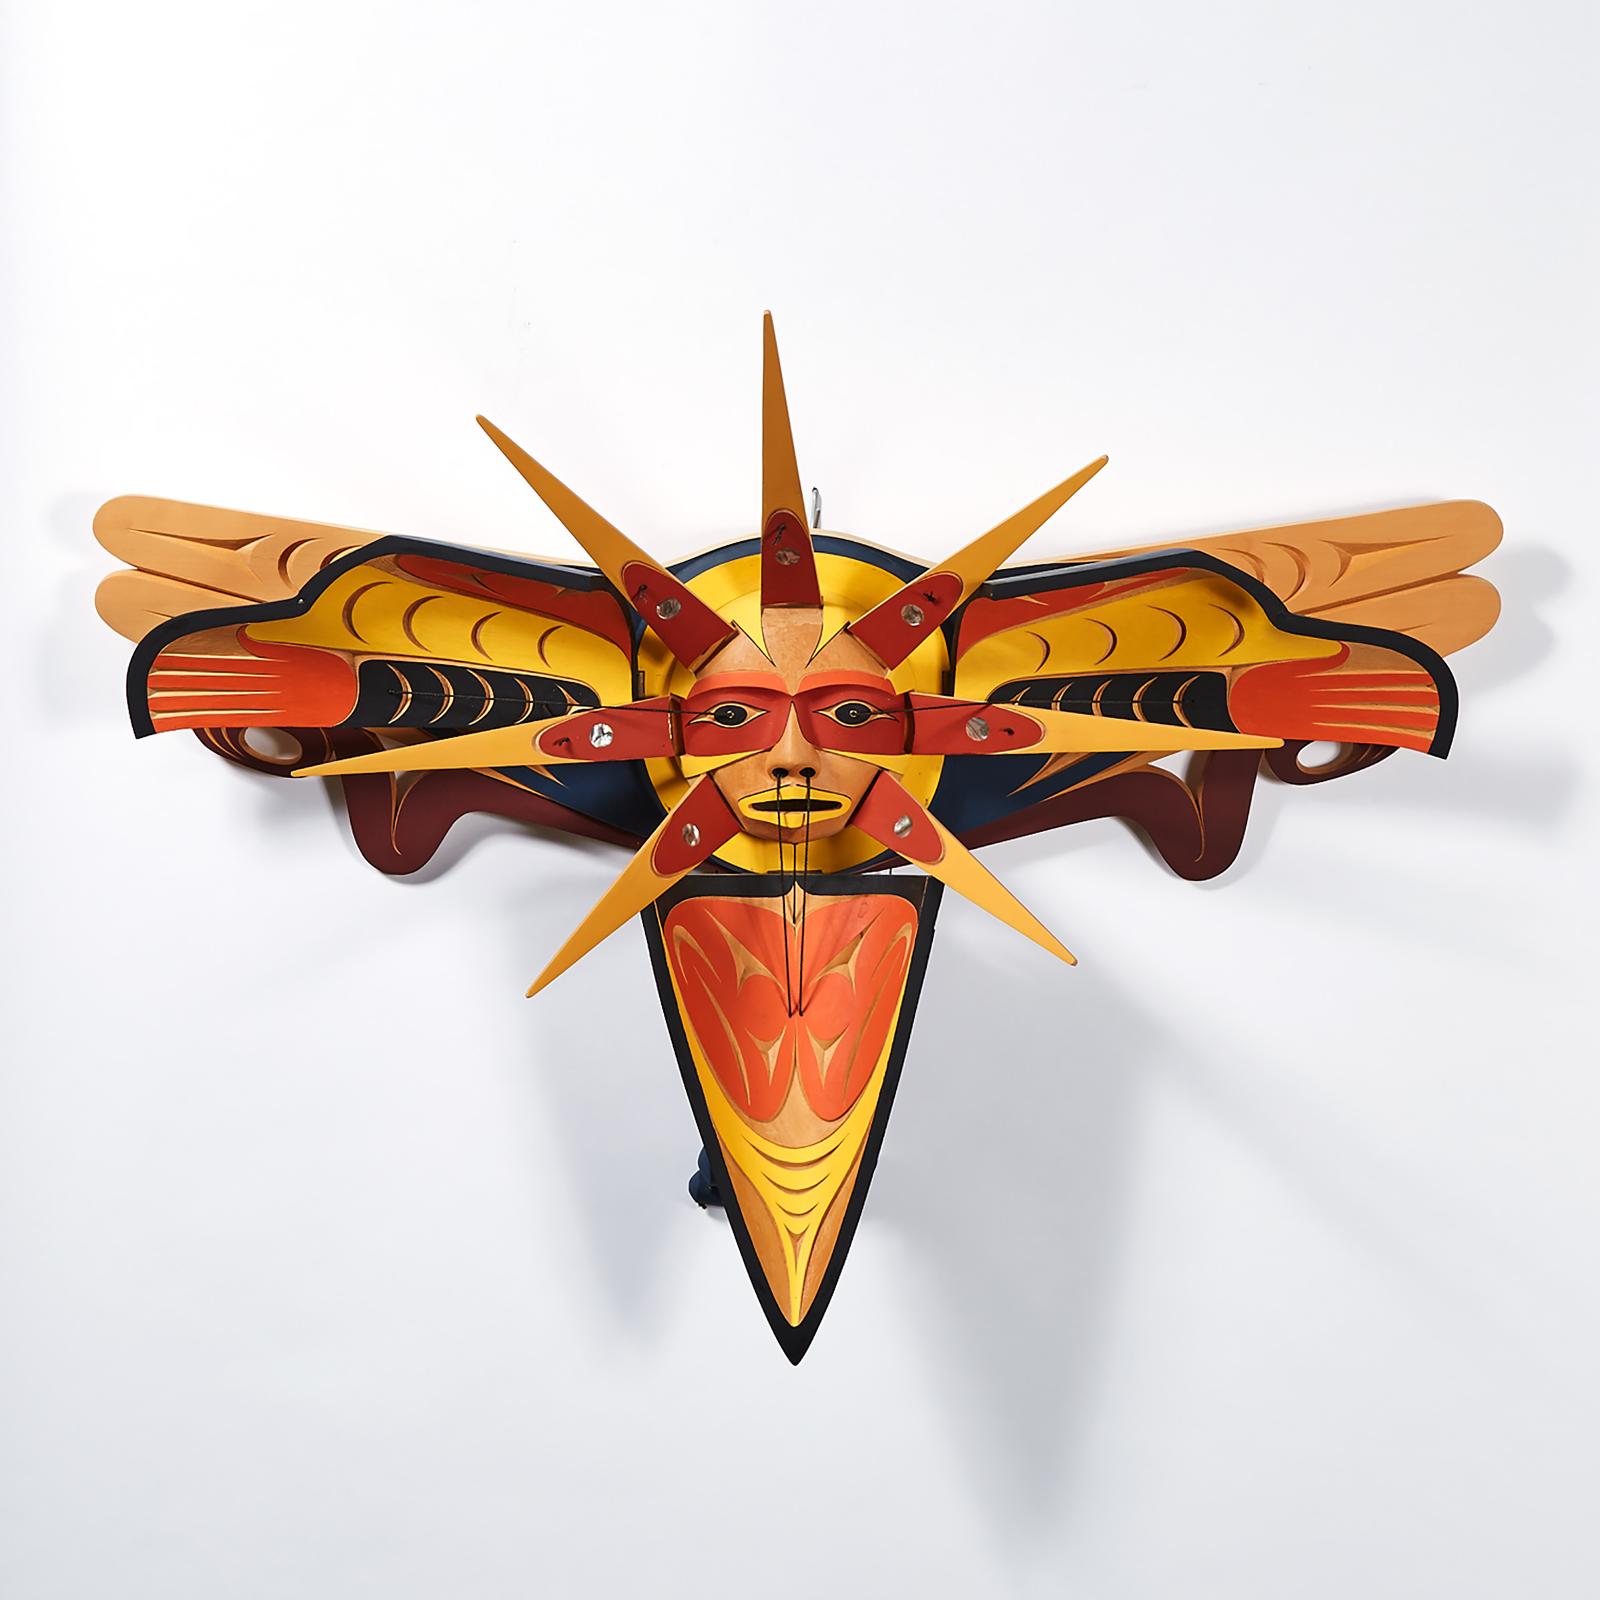 Luke Marston - Eagle/Sun Transformation Mask